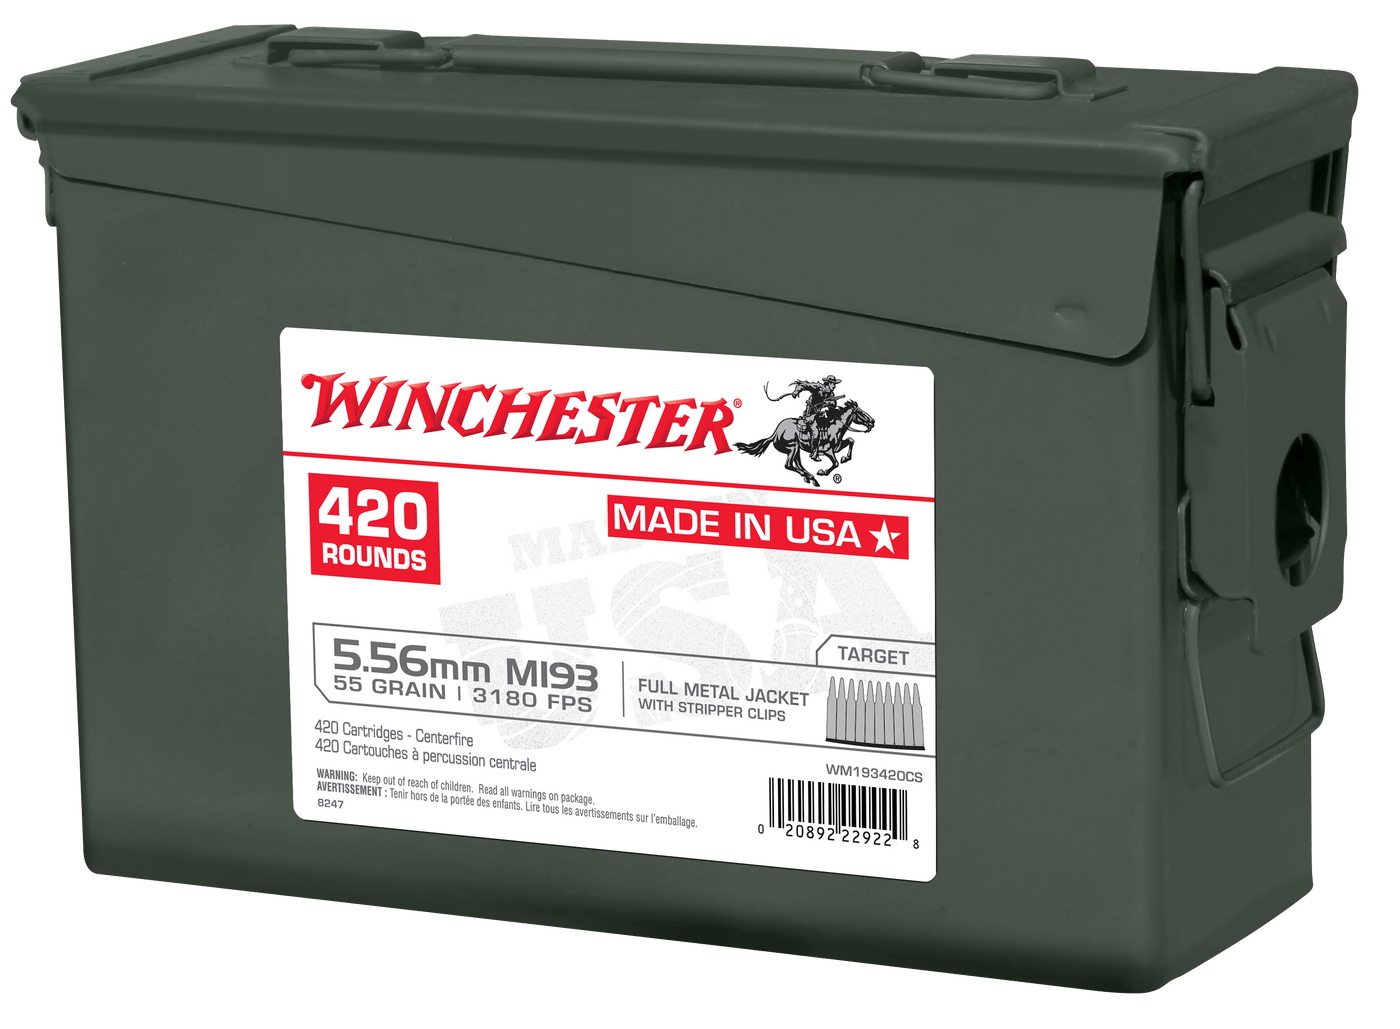 Winchester Ammo Winchester Ammo Usa, Win Wm193420cs 5.56       55 Fmj   2cans     840ct Ammo